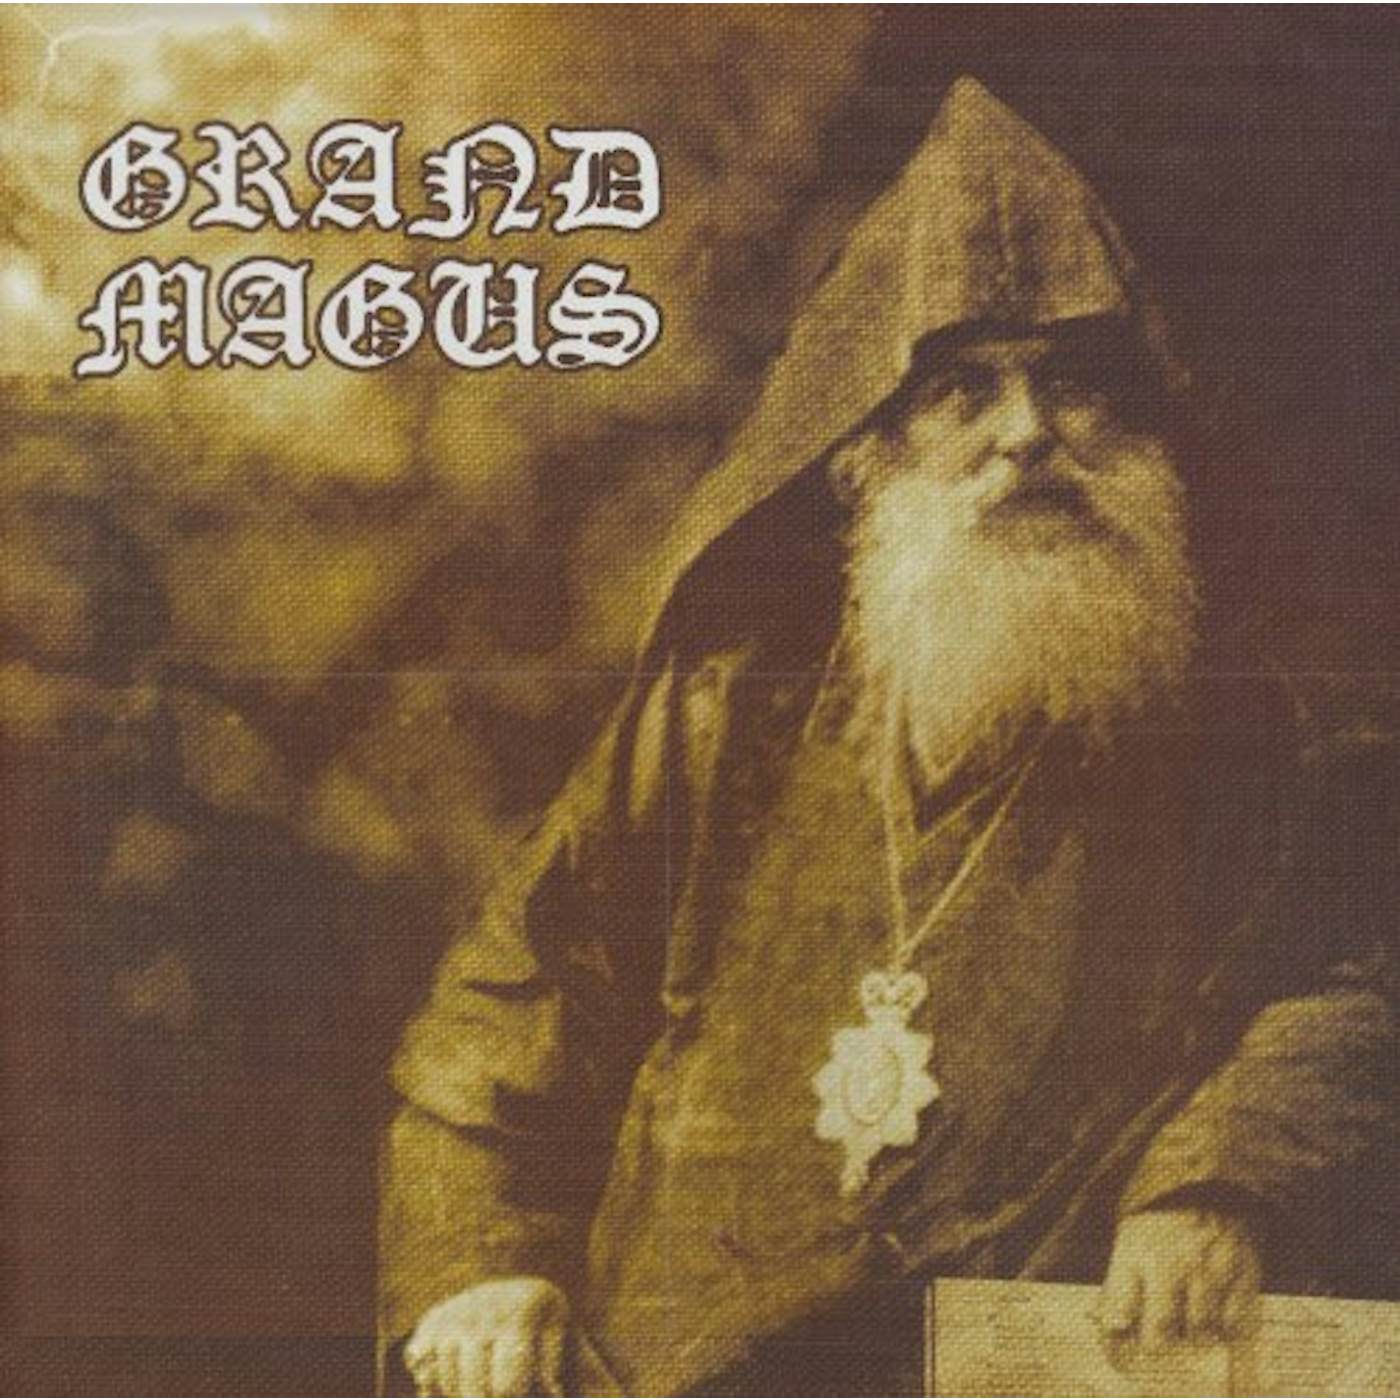 Grand Magus Vinyl Record